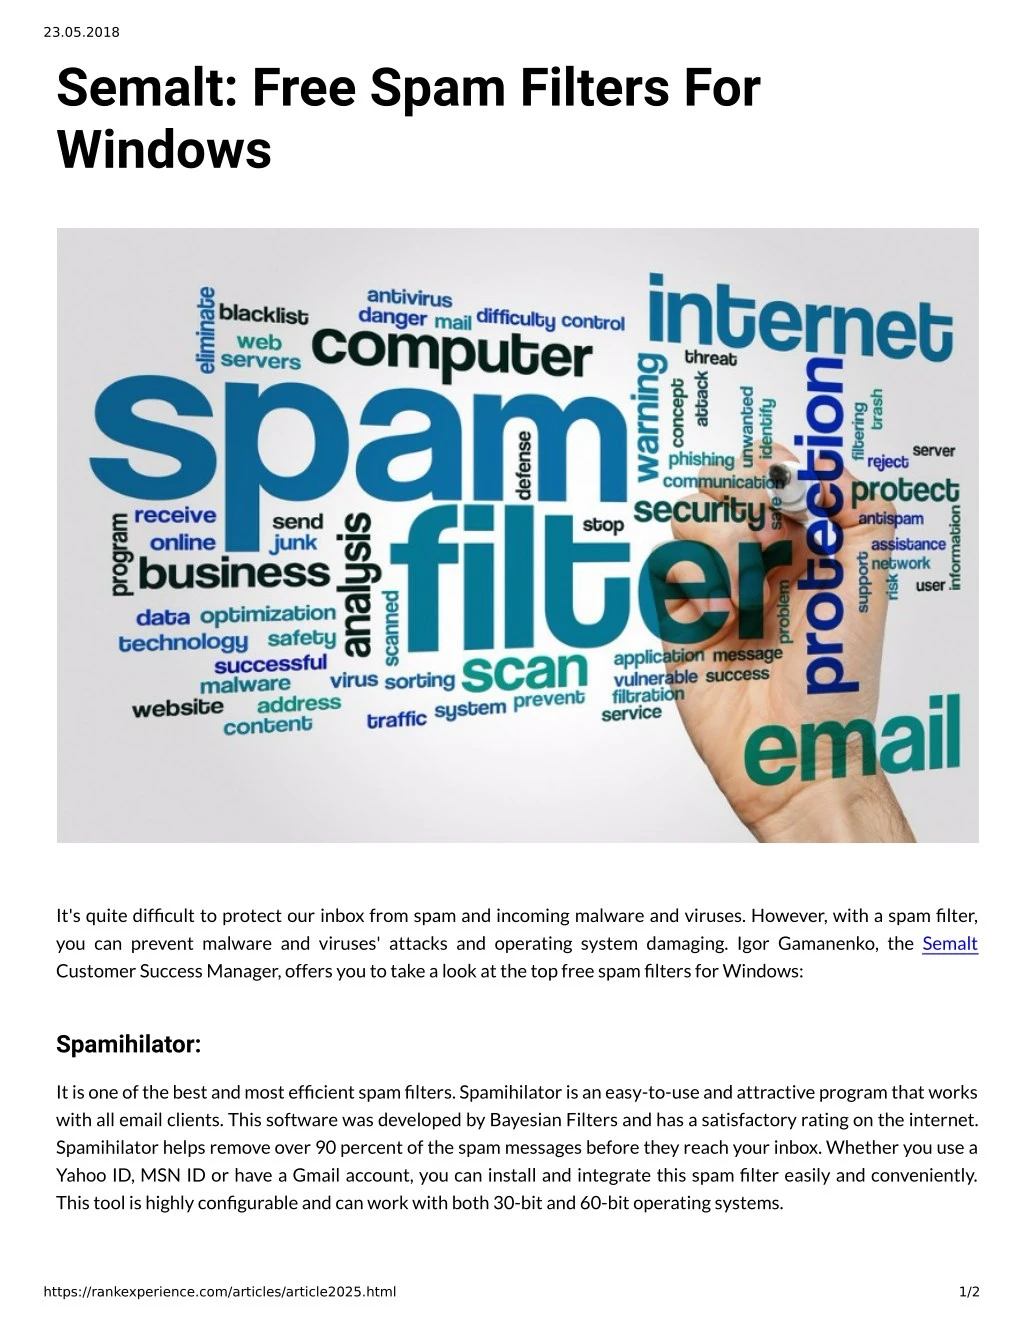 23 05 2018 semalt free spam filters for windows